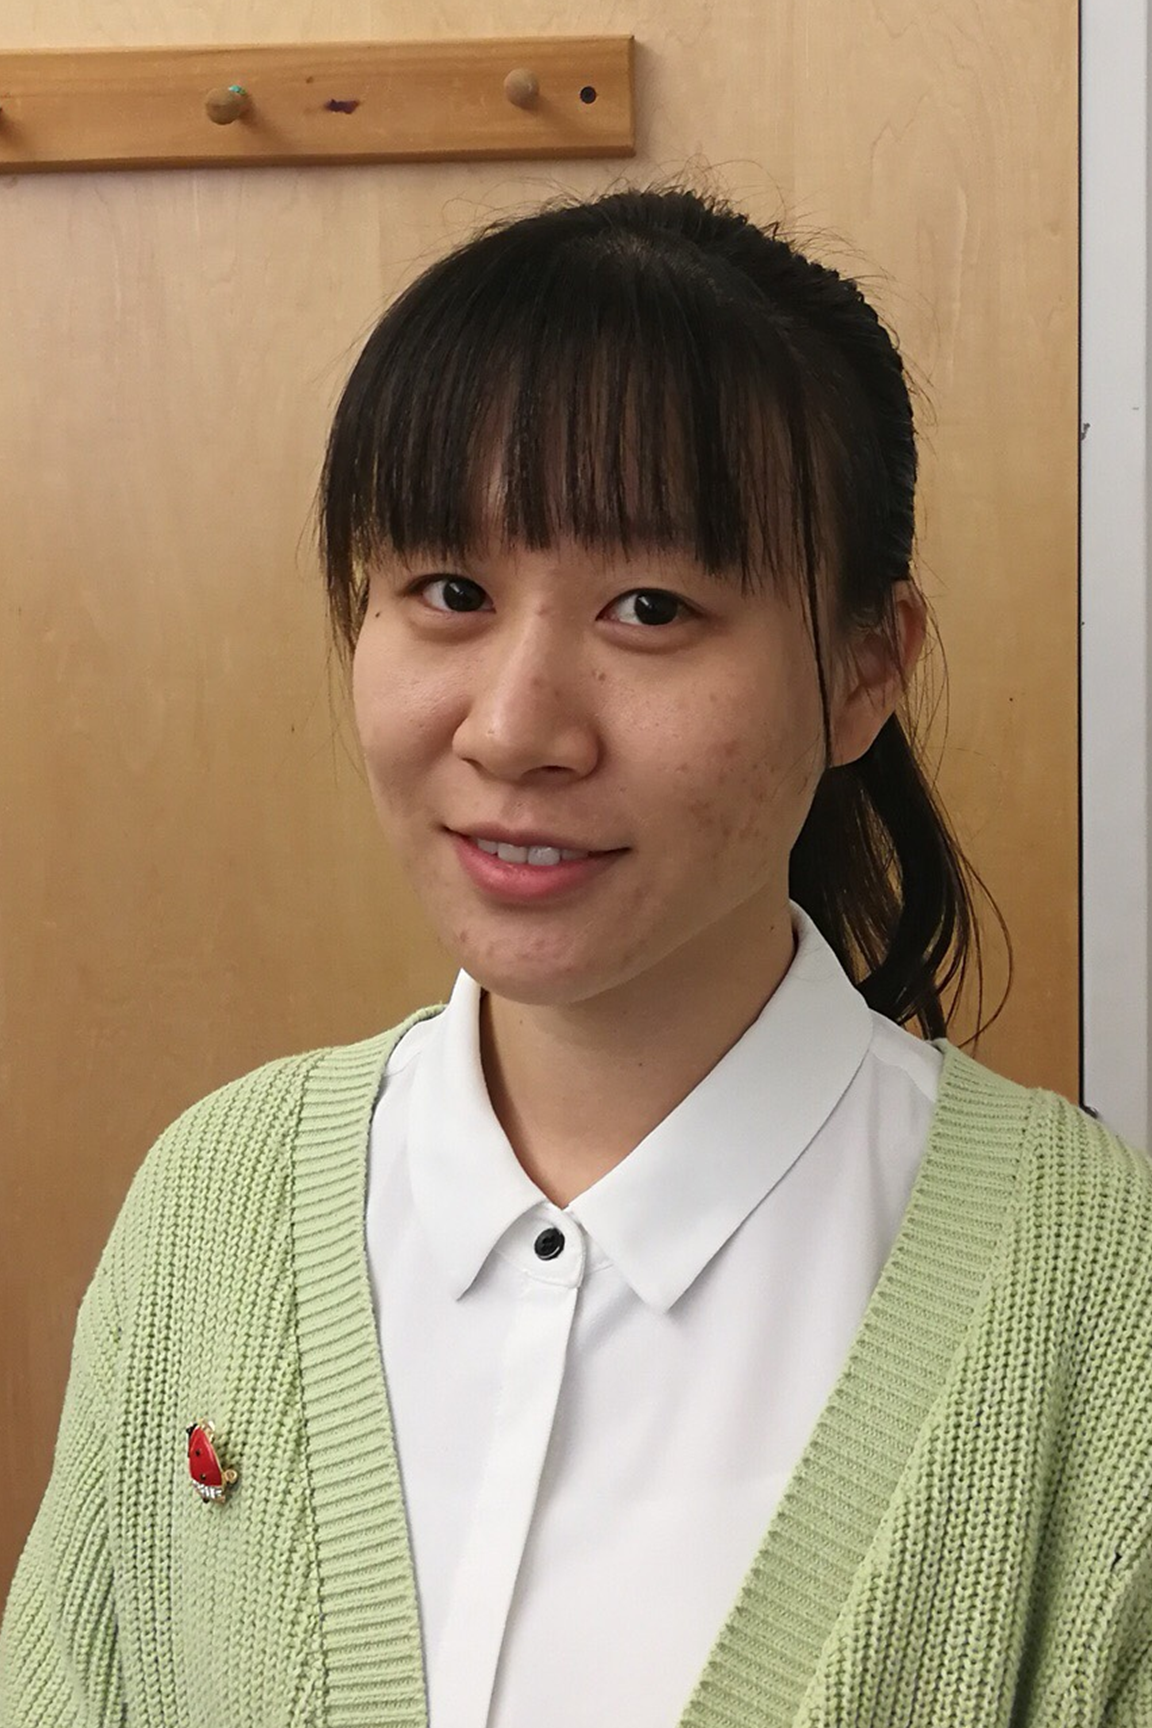 Xiang Li Integrated Applied Mathematics PhD Student